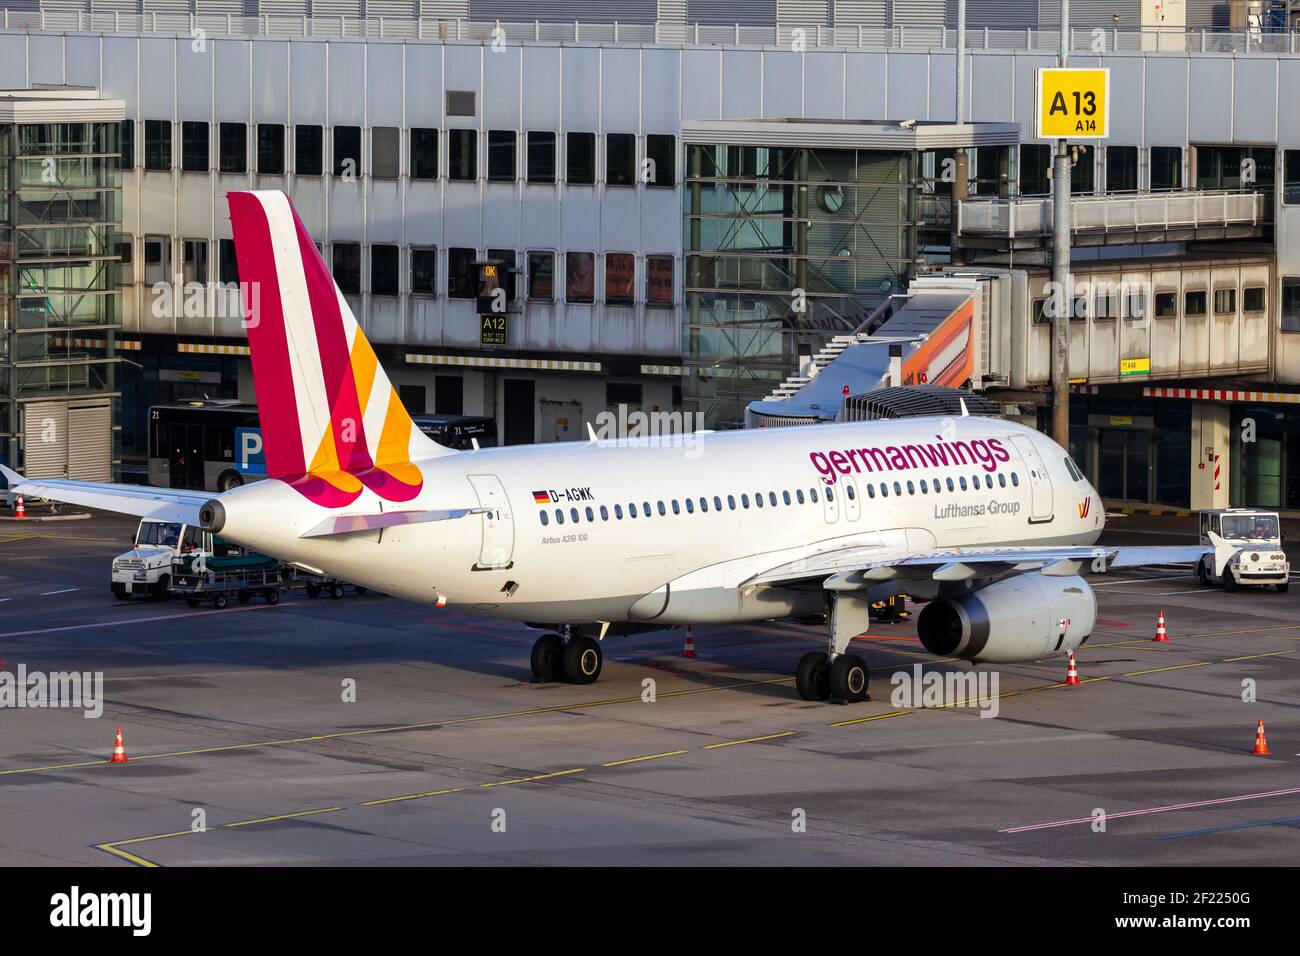 GermanWings Airbus A319-100 passenger plane at Dusseldorf Airport. Germany - December 17, 2015 Stock Photo